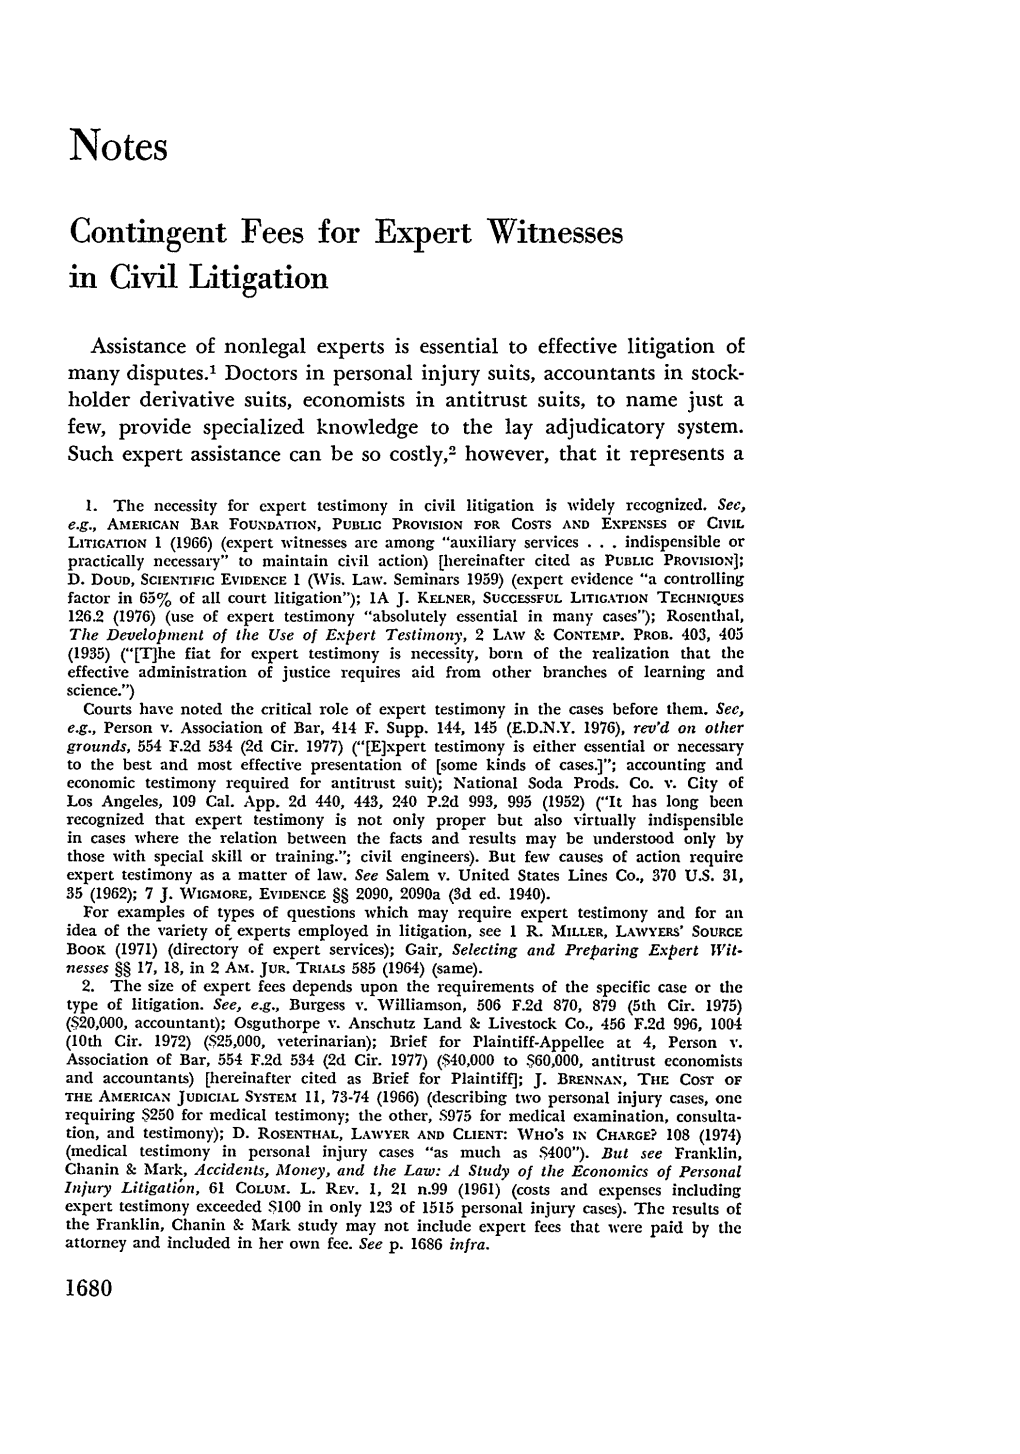 Contingent Fees for Expert Witnesses in Civil Litigation